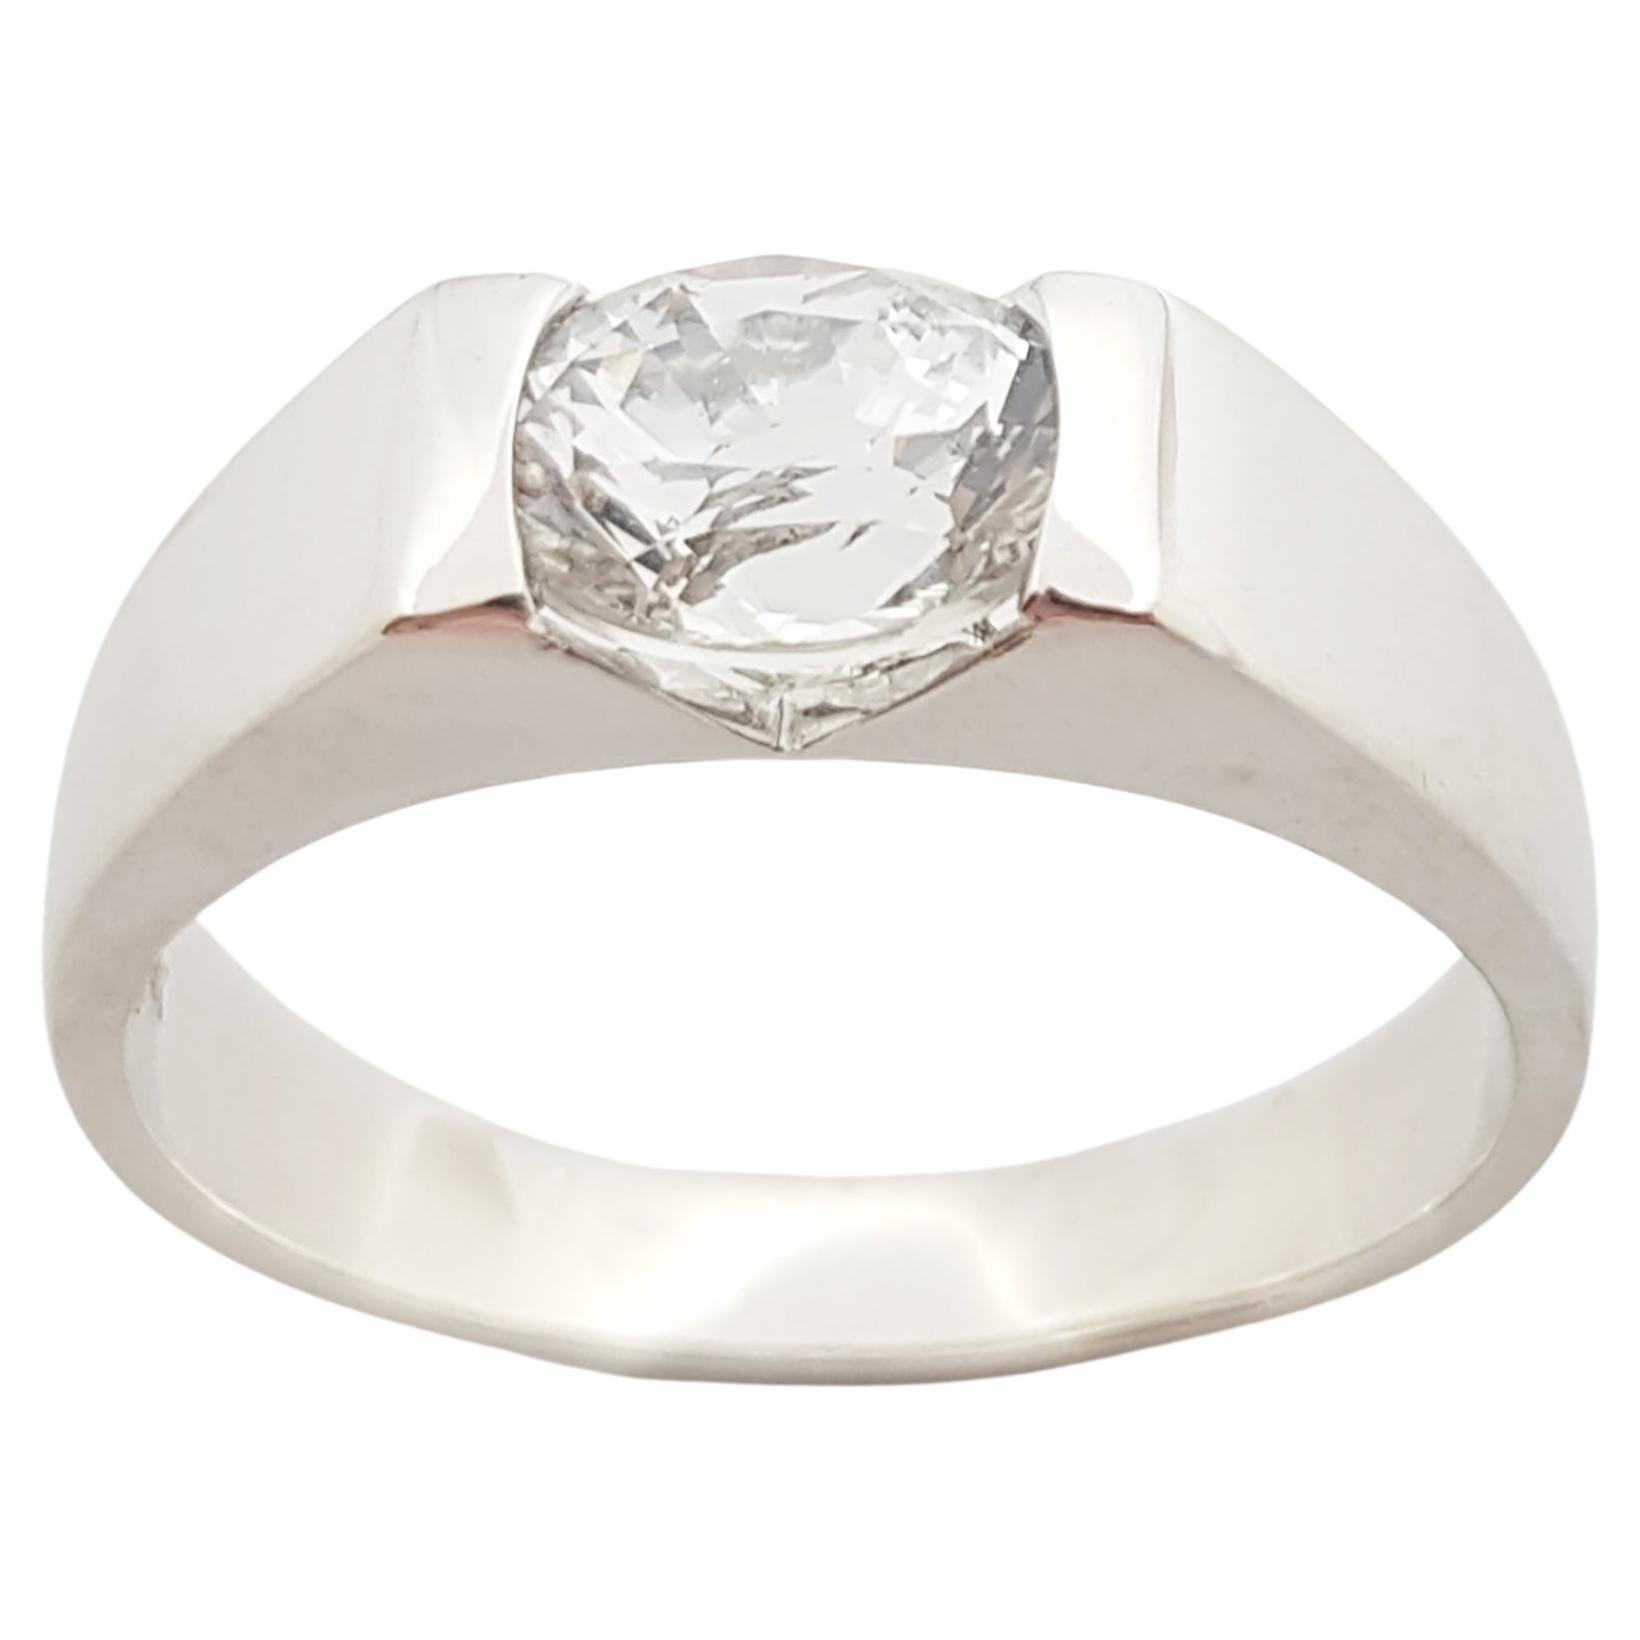 White Sapphire Engagement Ring Set in 14 Karat White Gold Settings